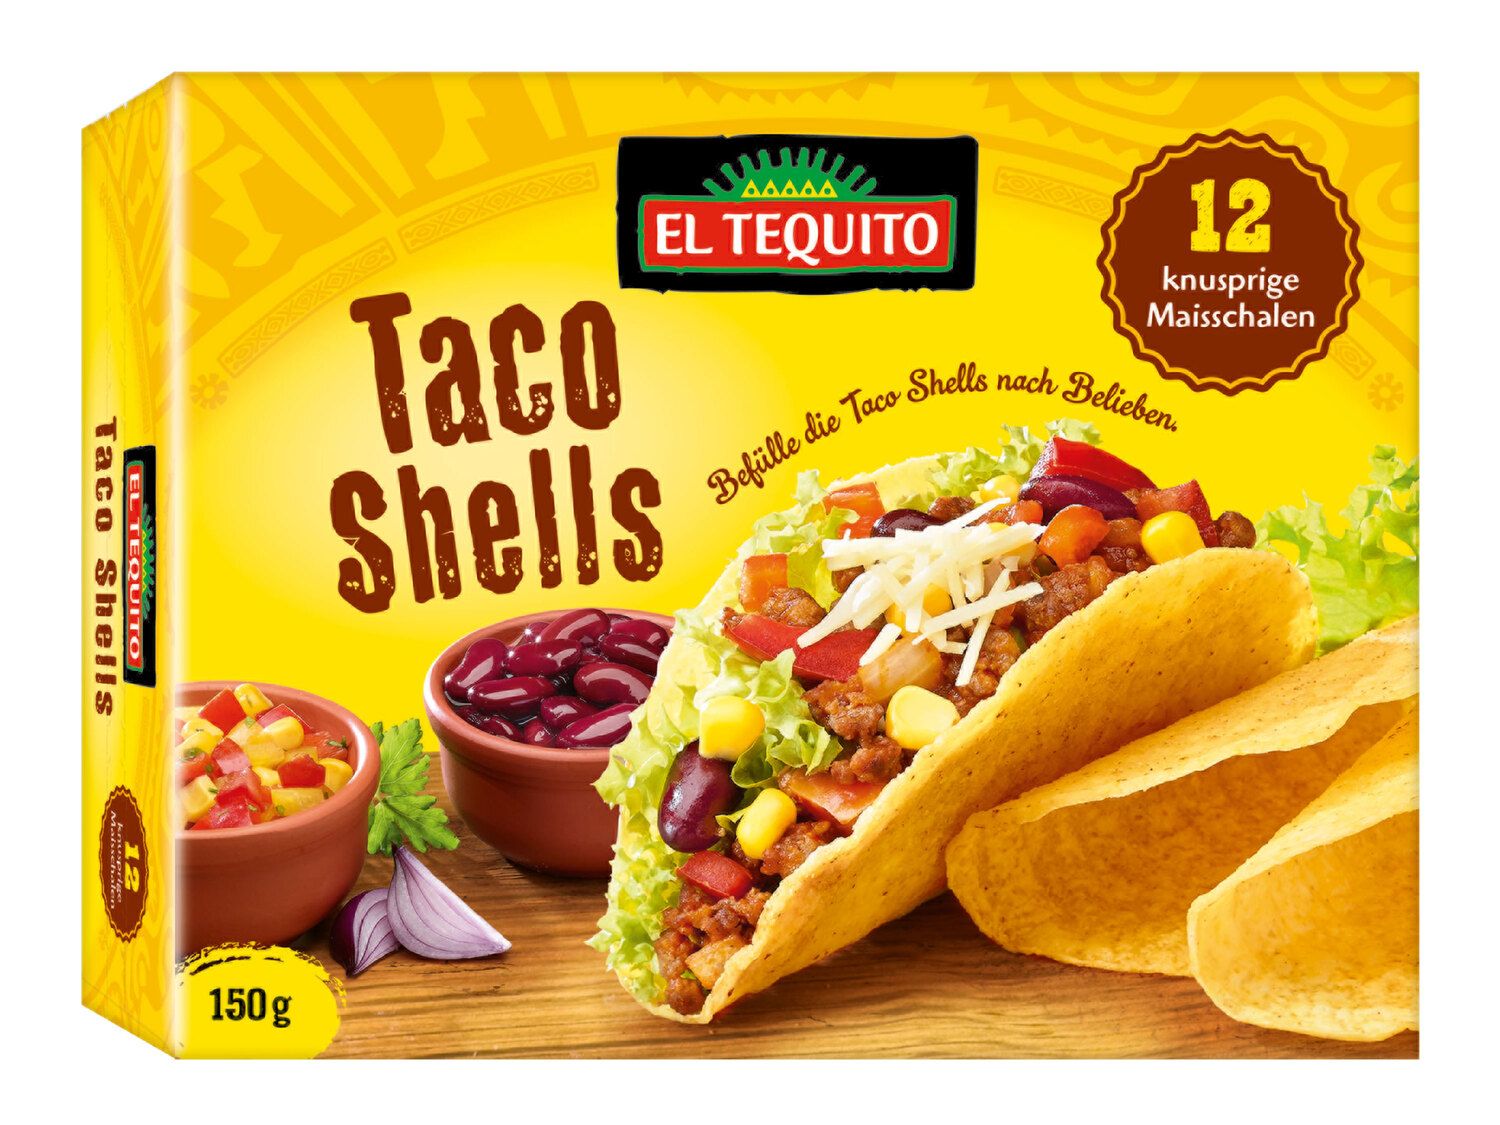 Lidl Compare ᐉ El / - Tequito Price Taco / DE Shells